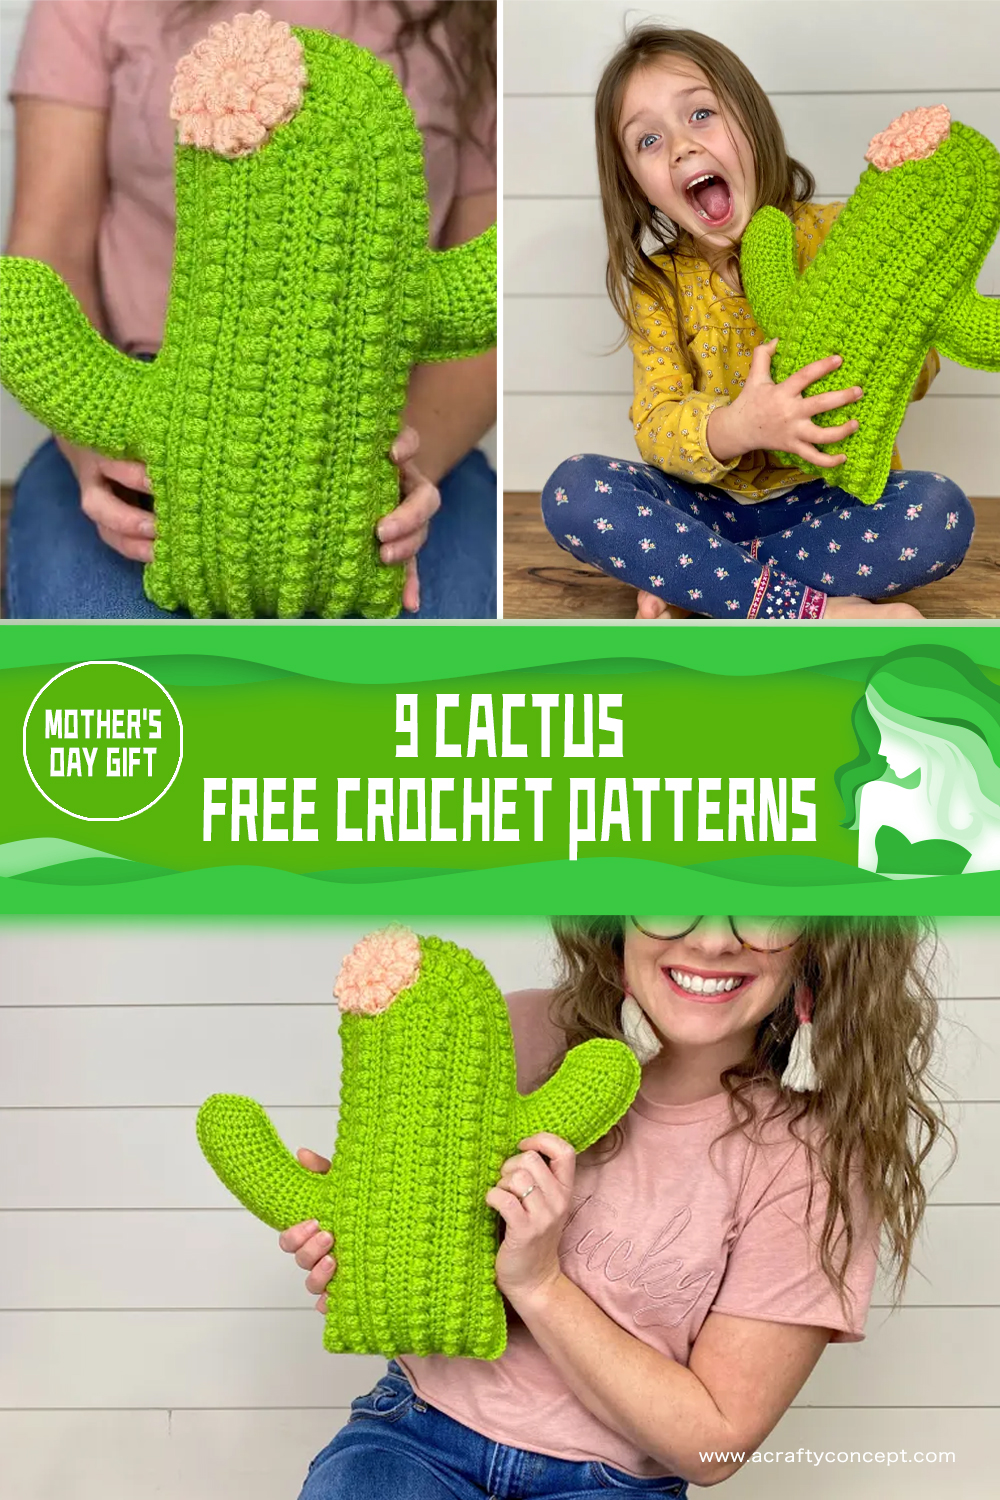  Cactus pillow FREE Crochet Patterns